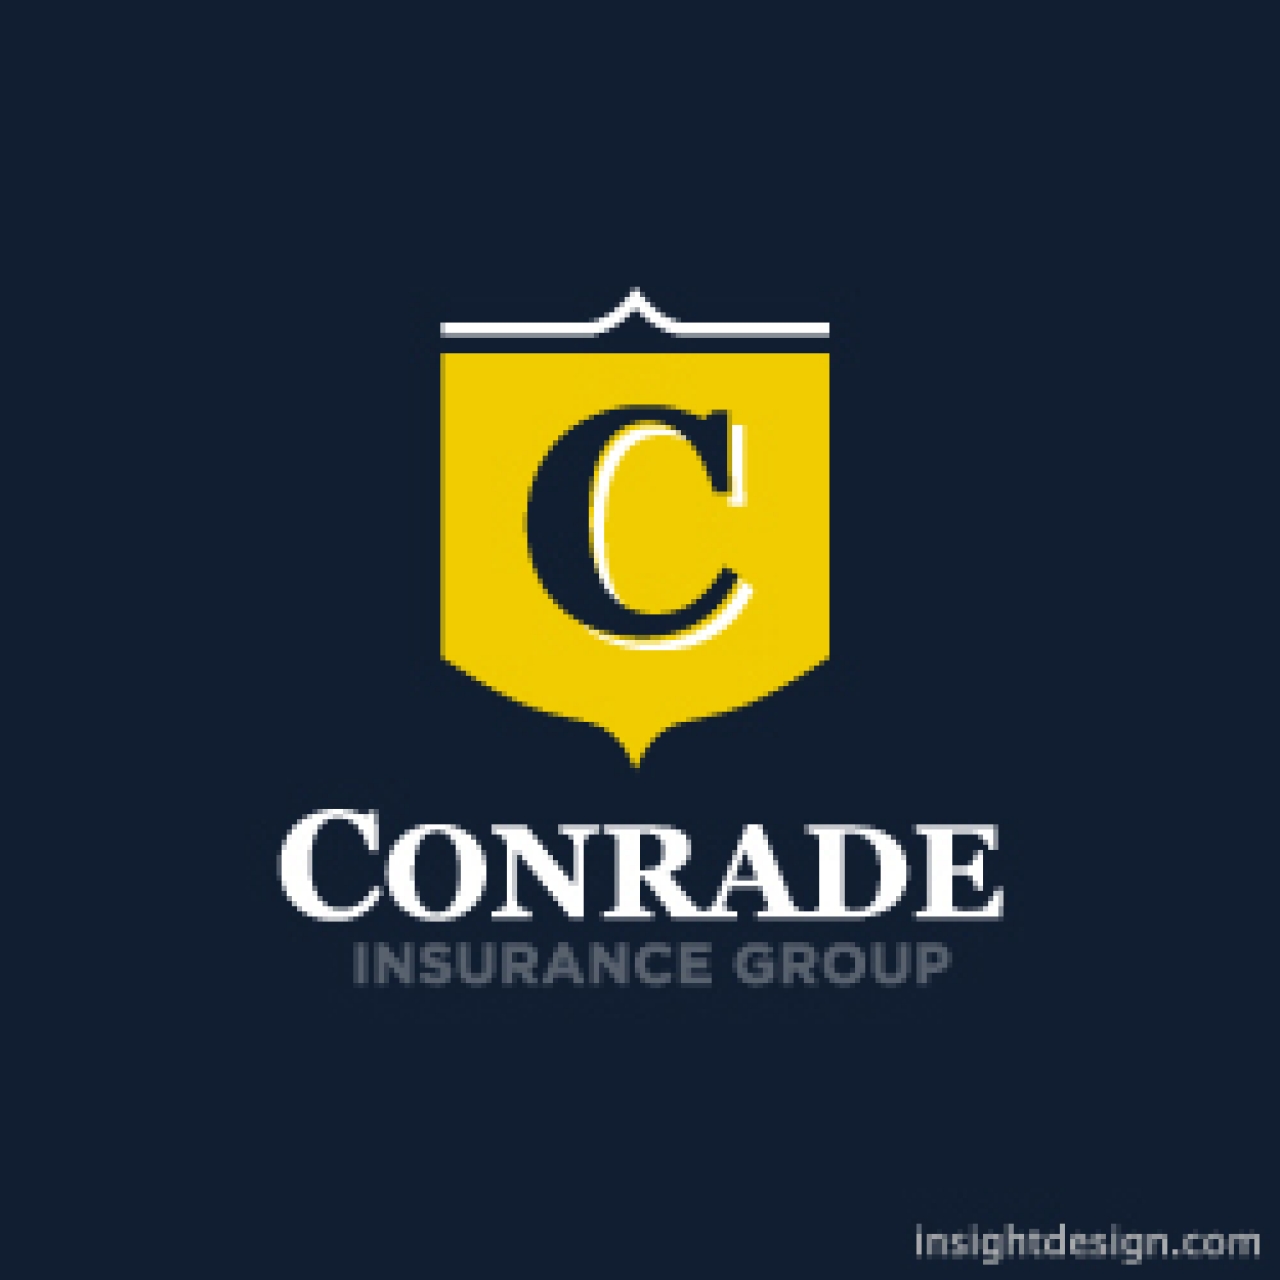 Conrade Insurance Group Logo Design